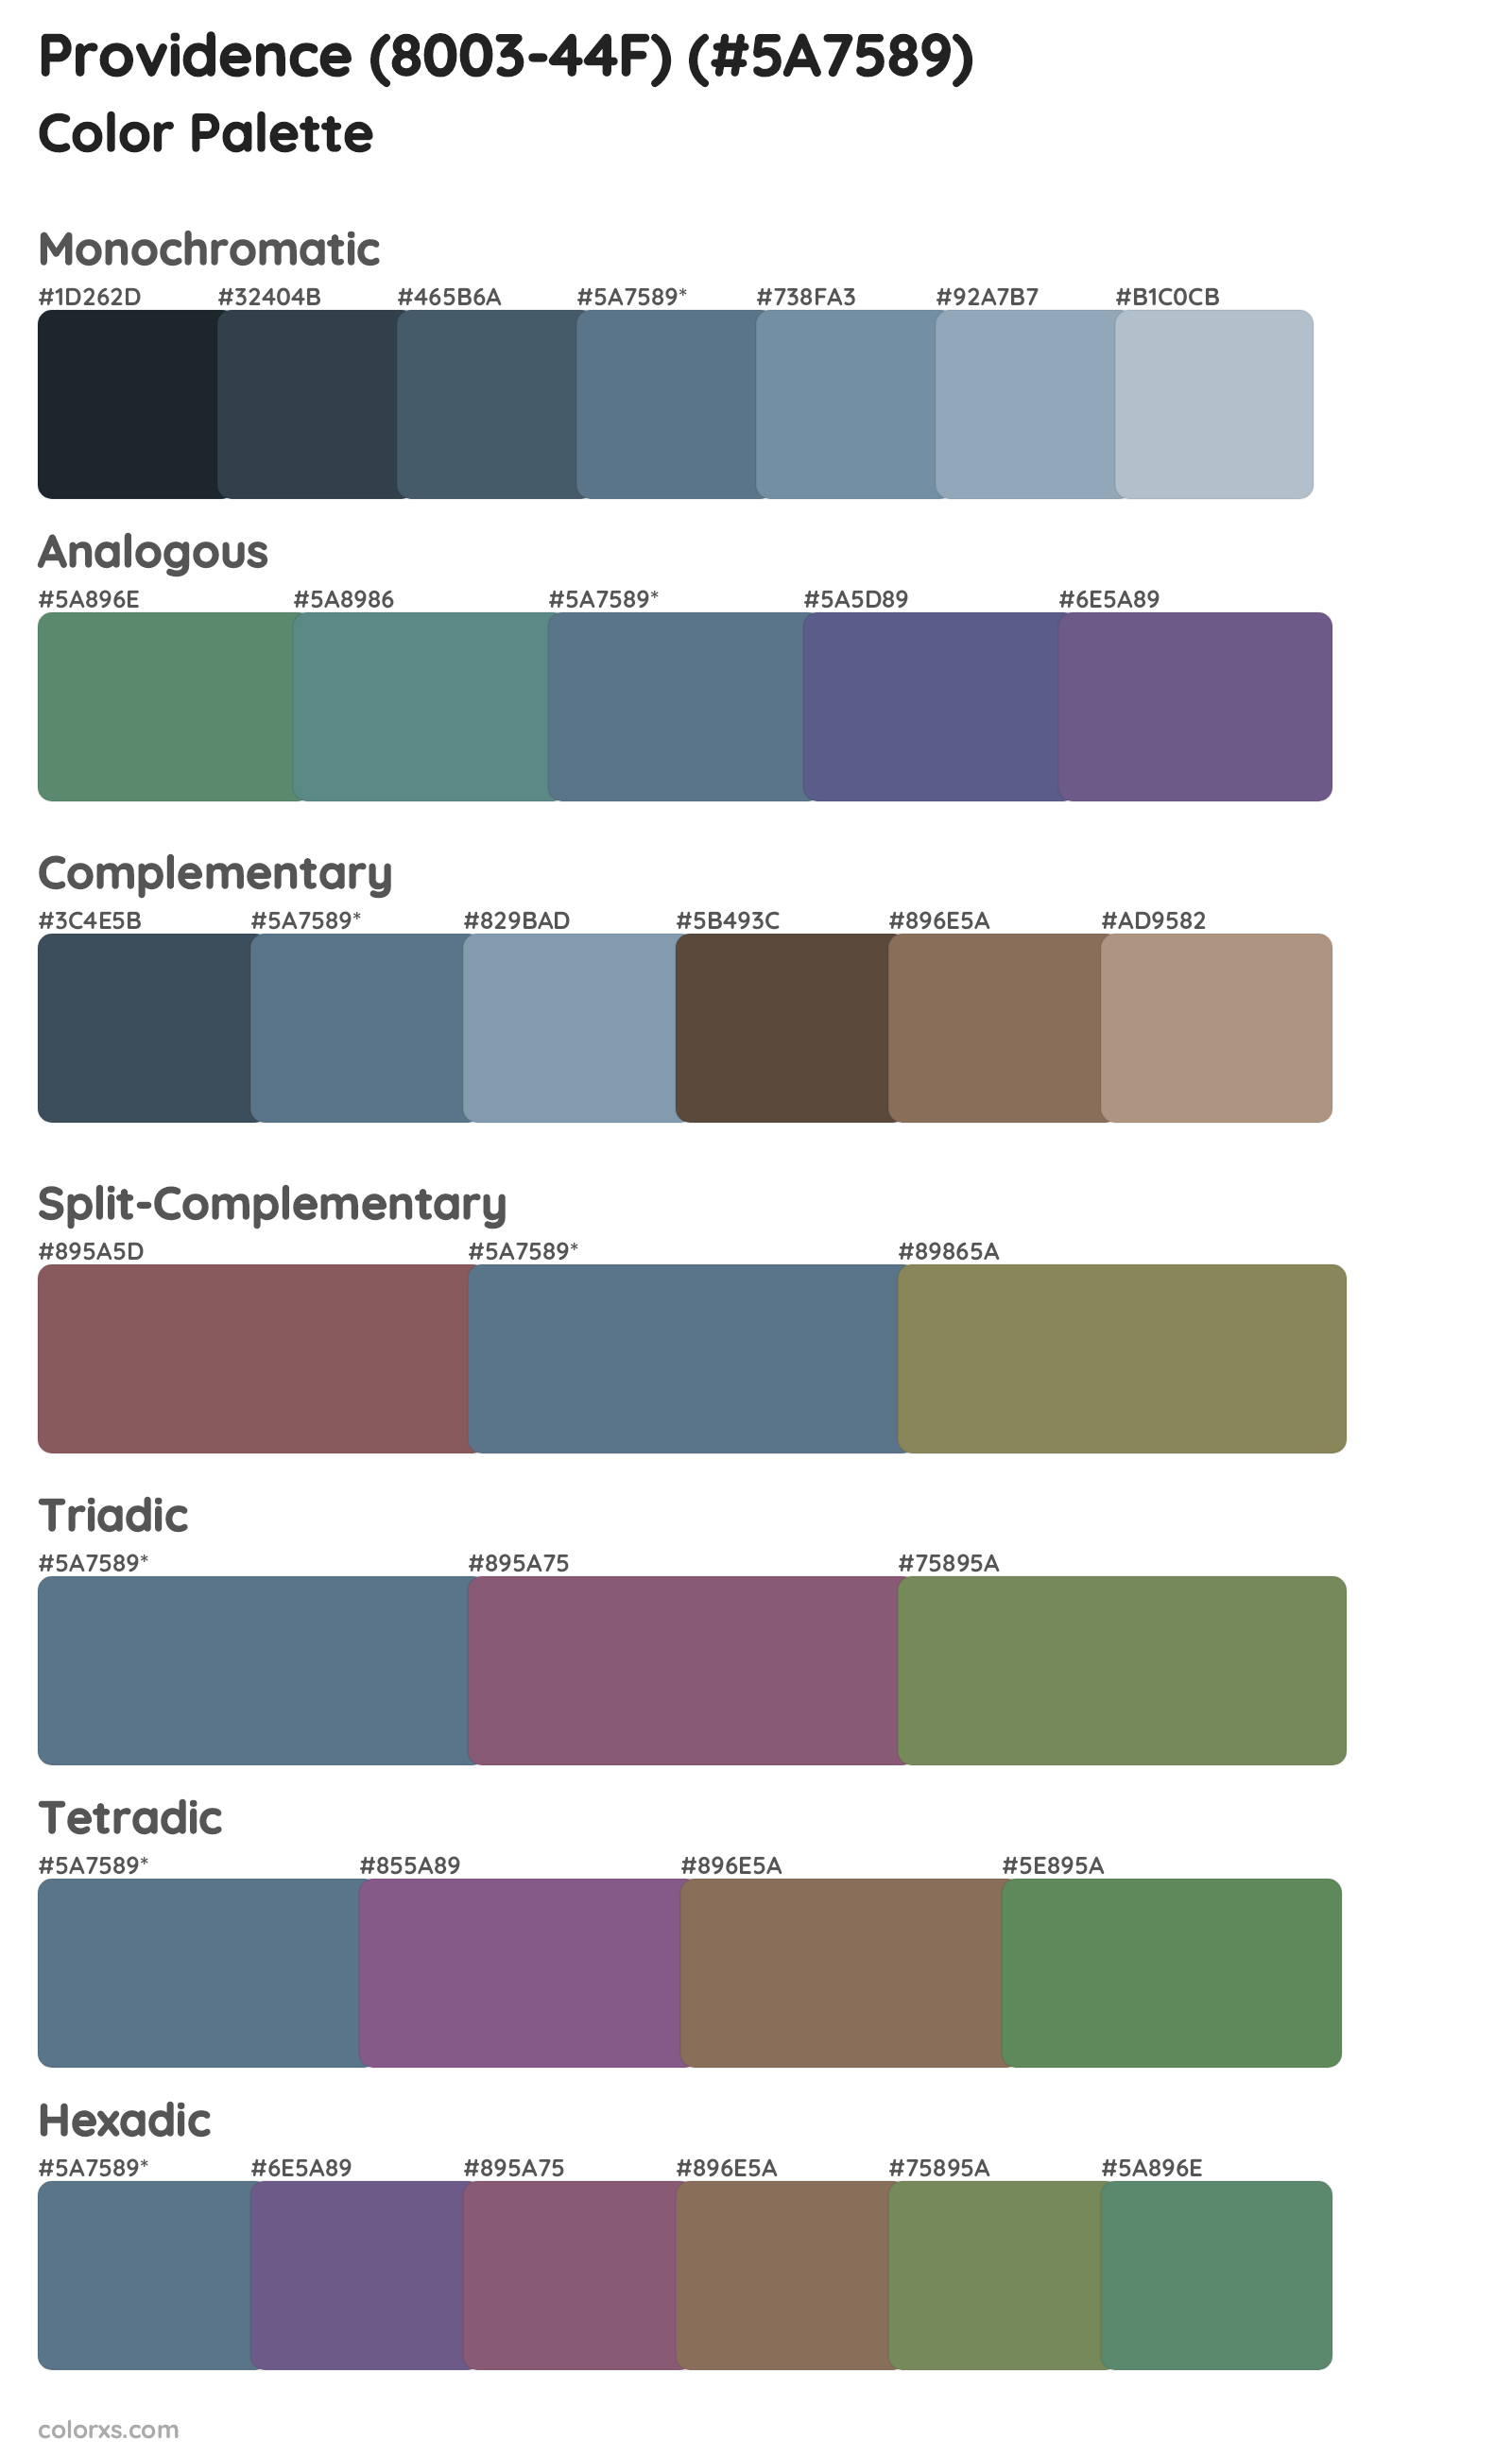 Providence (8003-44F) Color Scheme Palettes